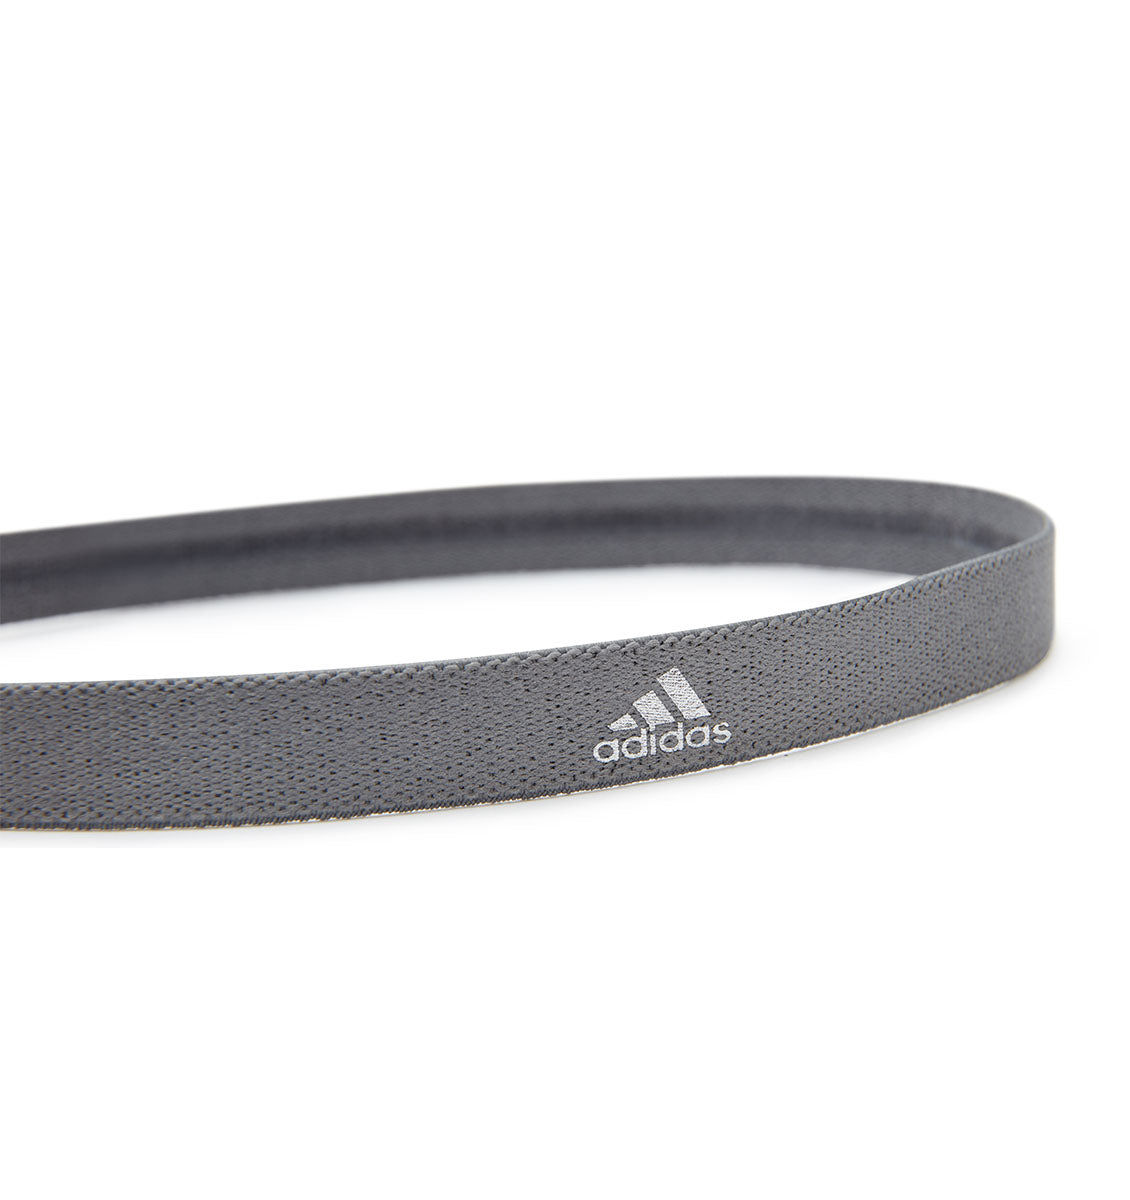 adidas Sports Hair Bands - Metallic Grey/Blue/Burgundy (3 Pack) - 7